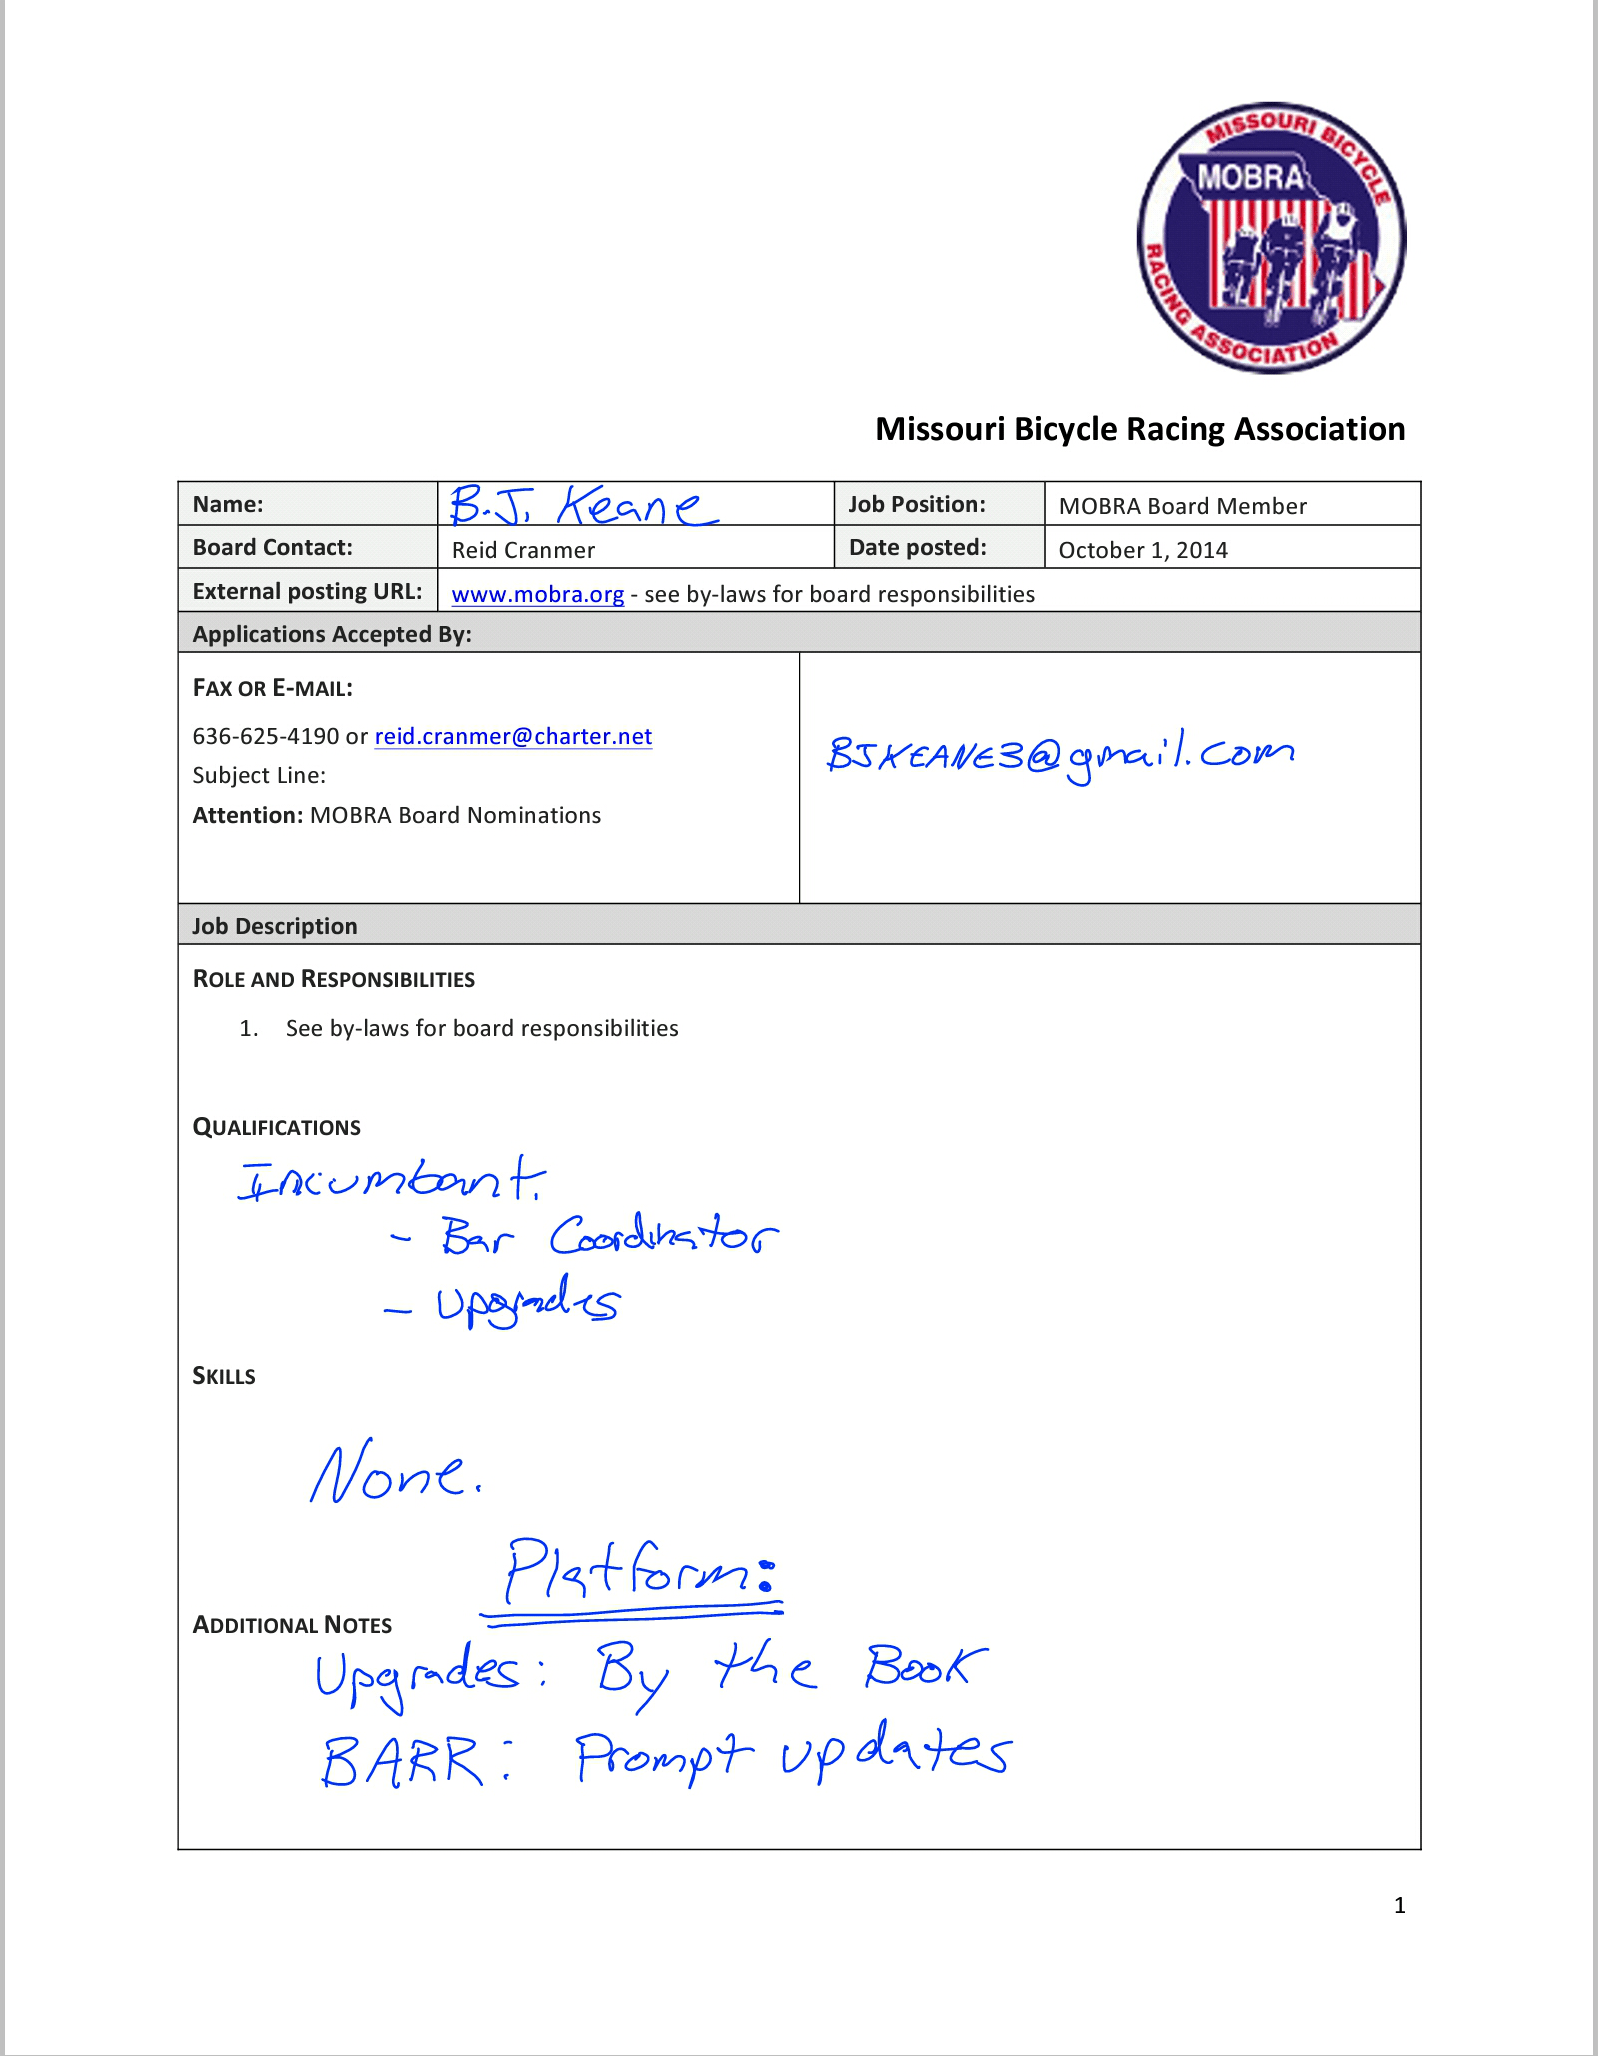 Bj Keane Board Nomination Form